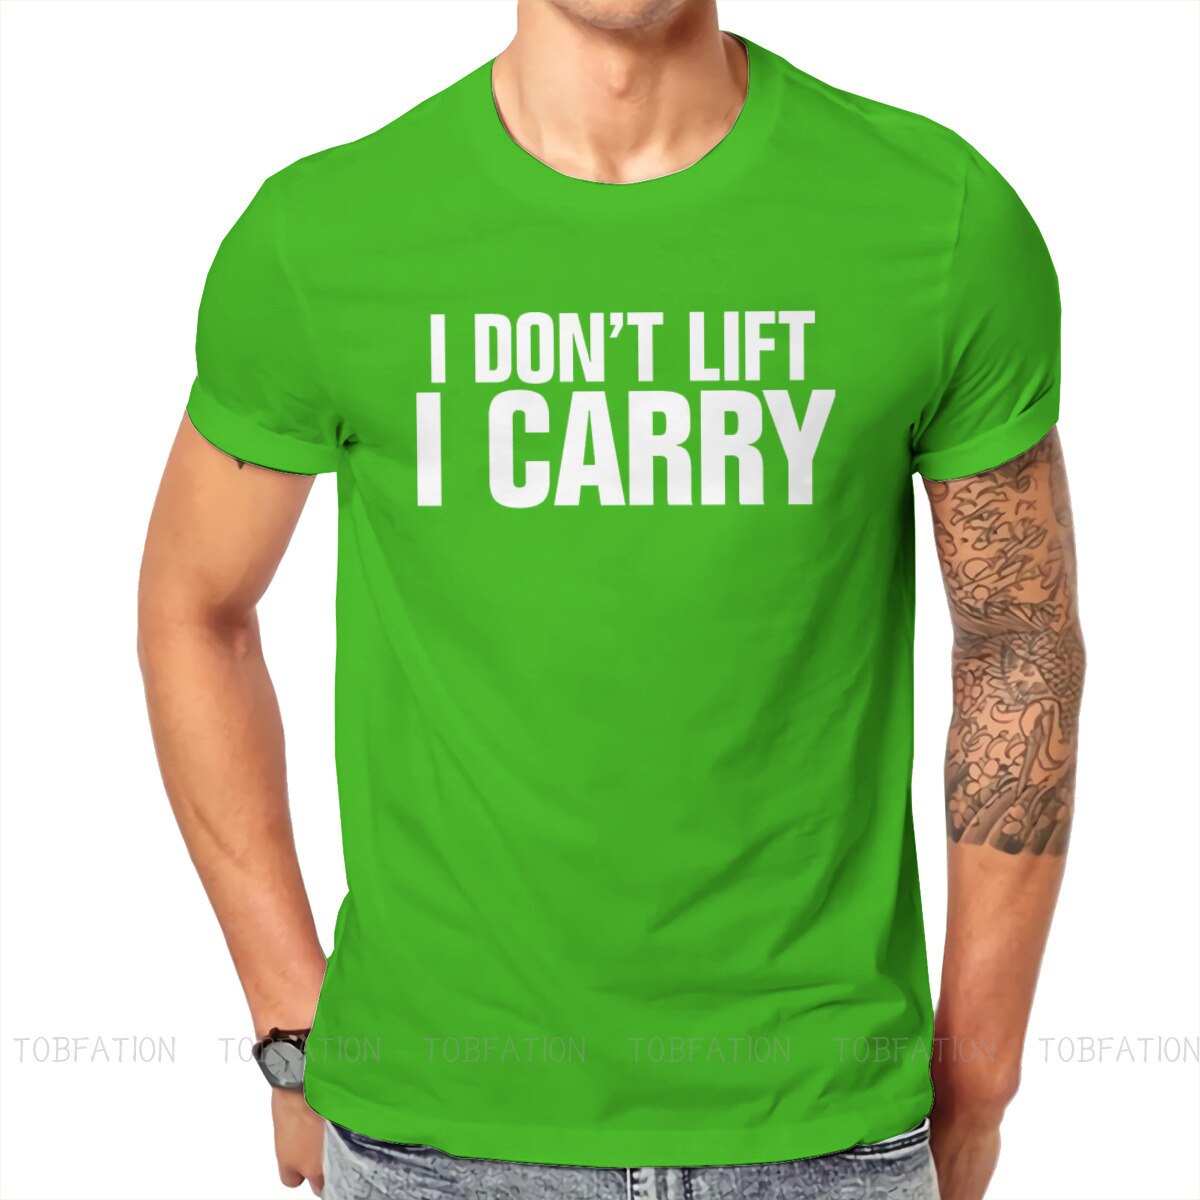 I Carry T-Shirts - League of Legends Fan Store